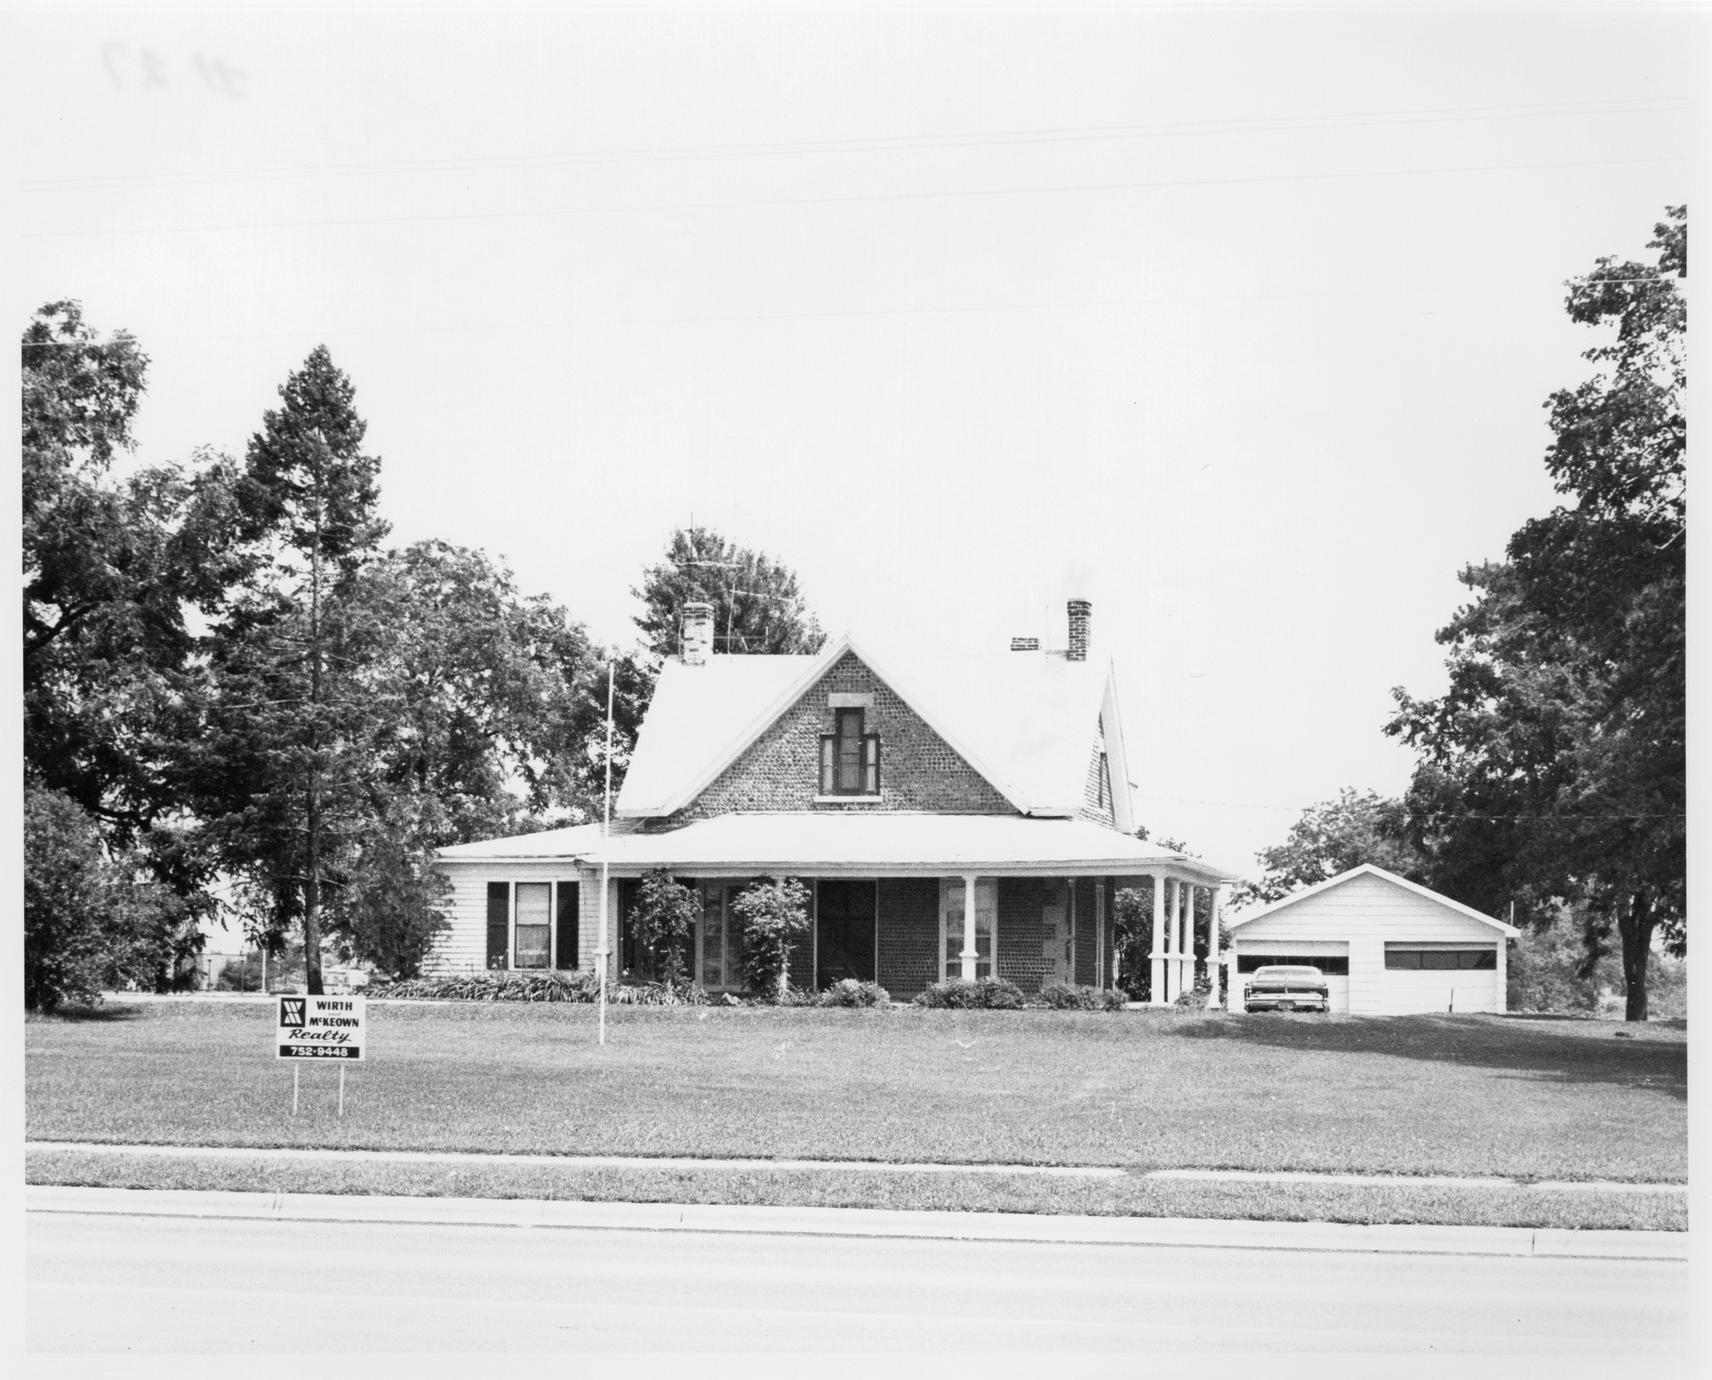 Cobblestone house, Janesville